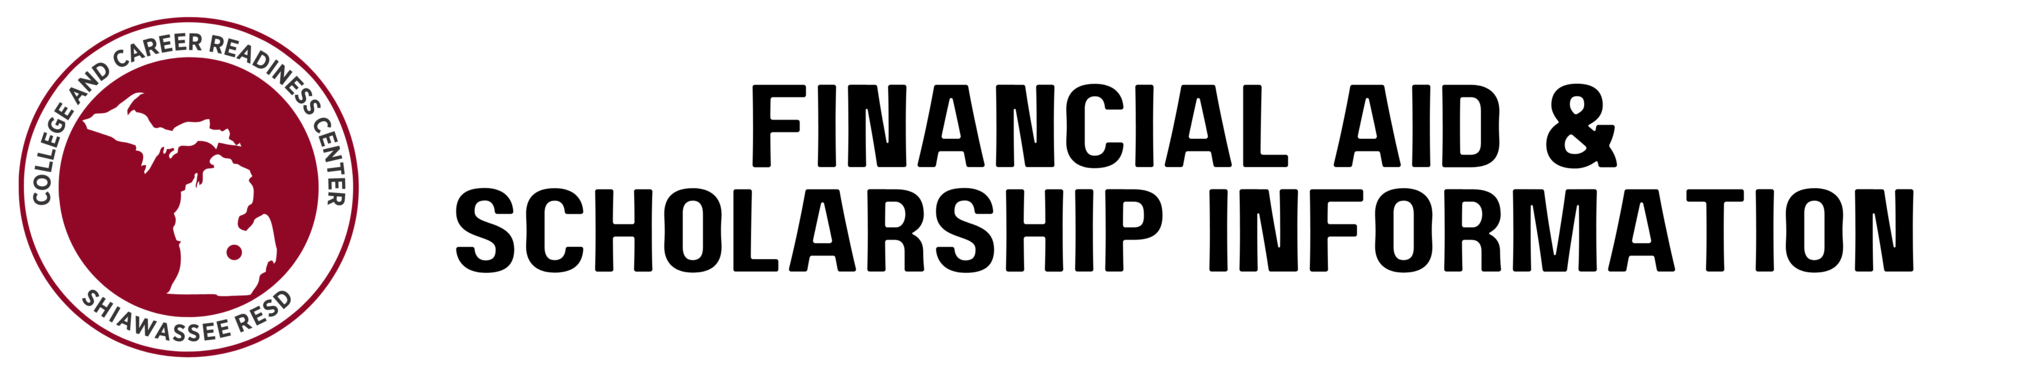 Financial Aid & Scholarship Information